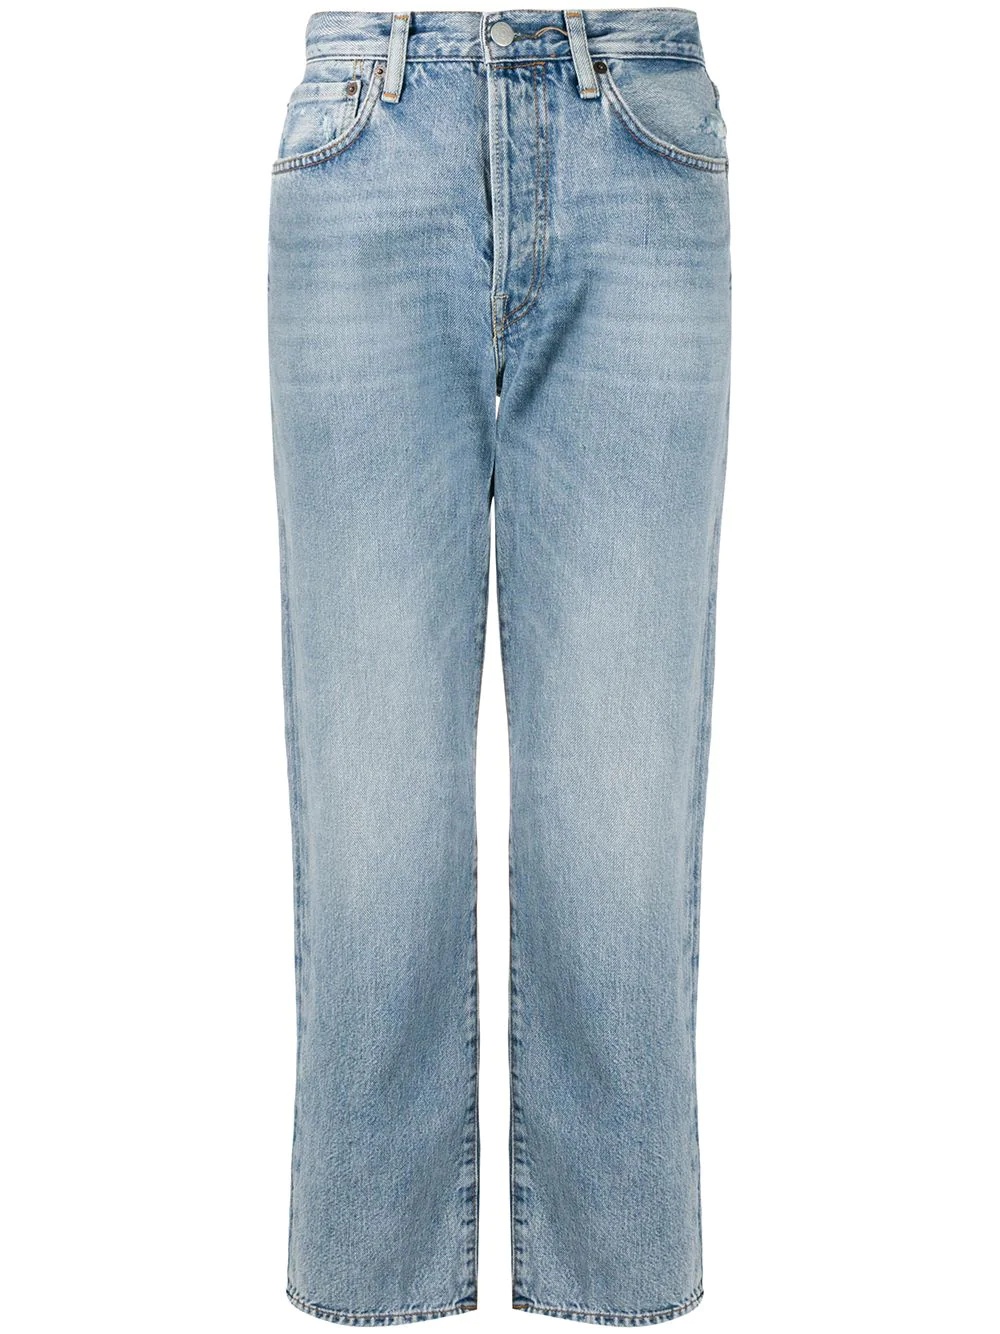 1996 Trash jeans - 1